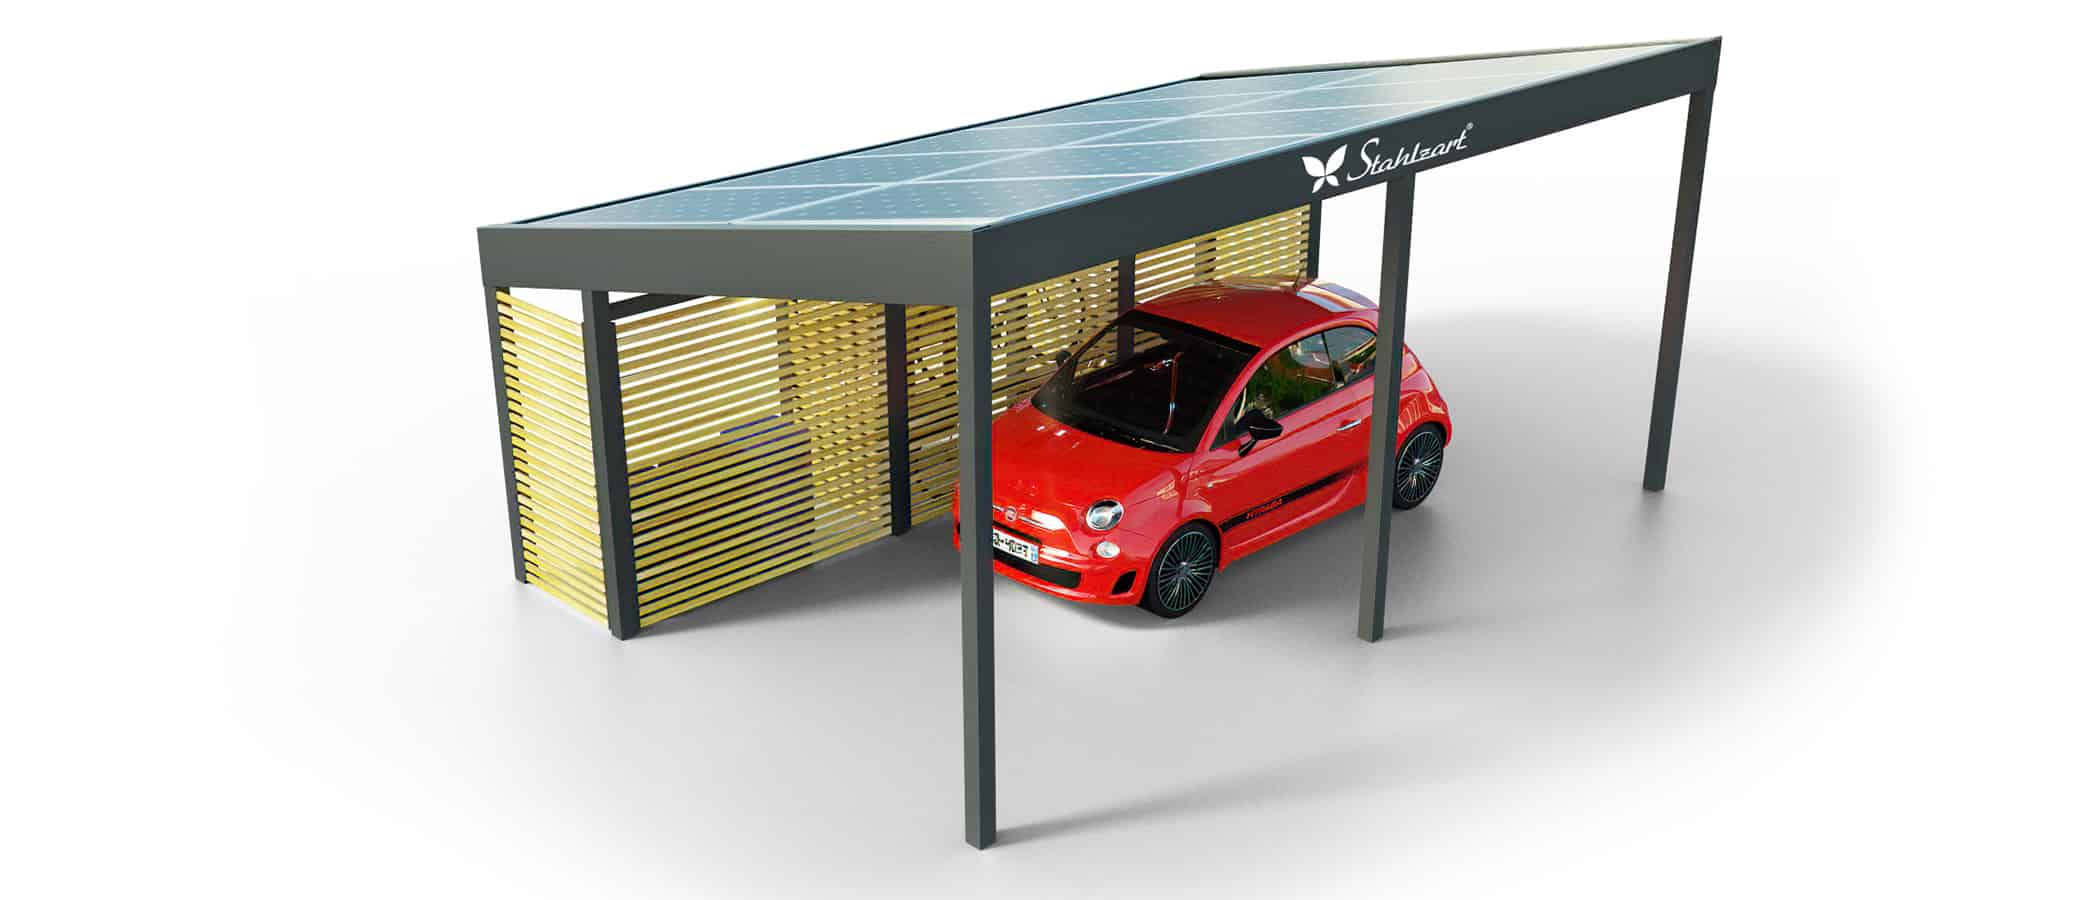 solar-carport-mit-schraegdach-solar-carports-e-fahrzeuge-pv-anlage-solarcarport-strom-solaranalge-carportdach-e-auto-fiat-500e-holz-metall-mit-schuppen-modern-stahlzart